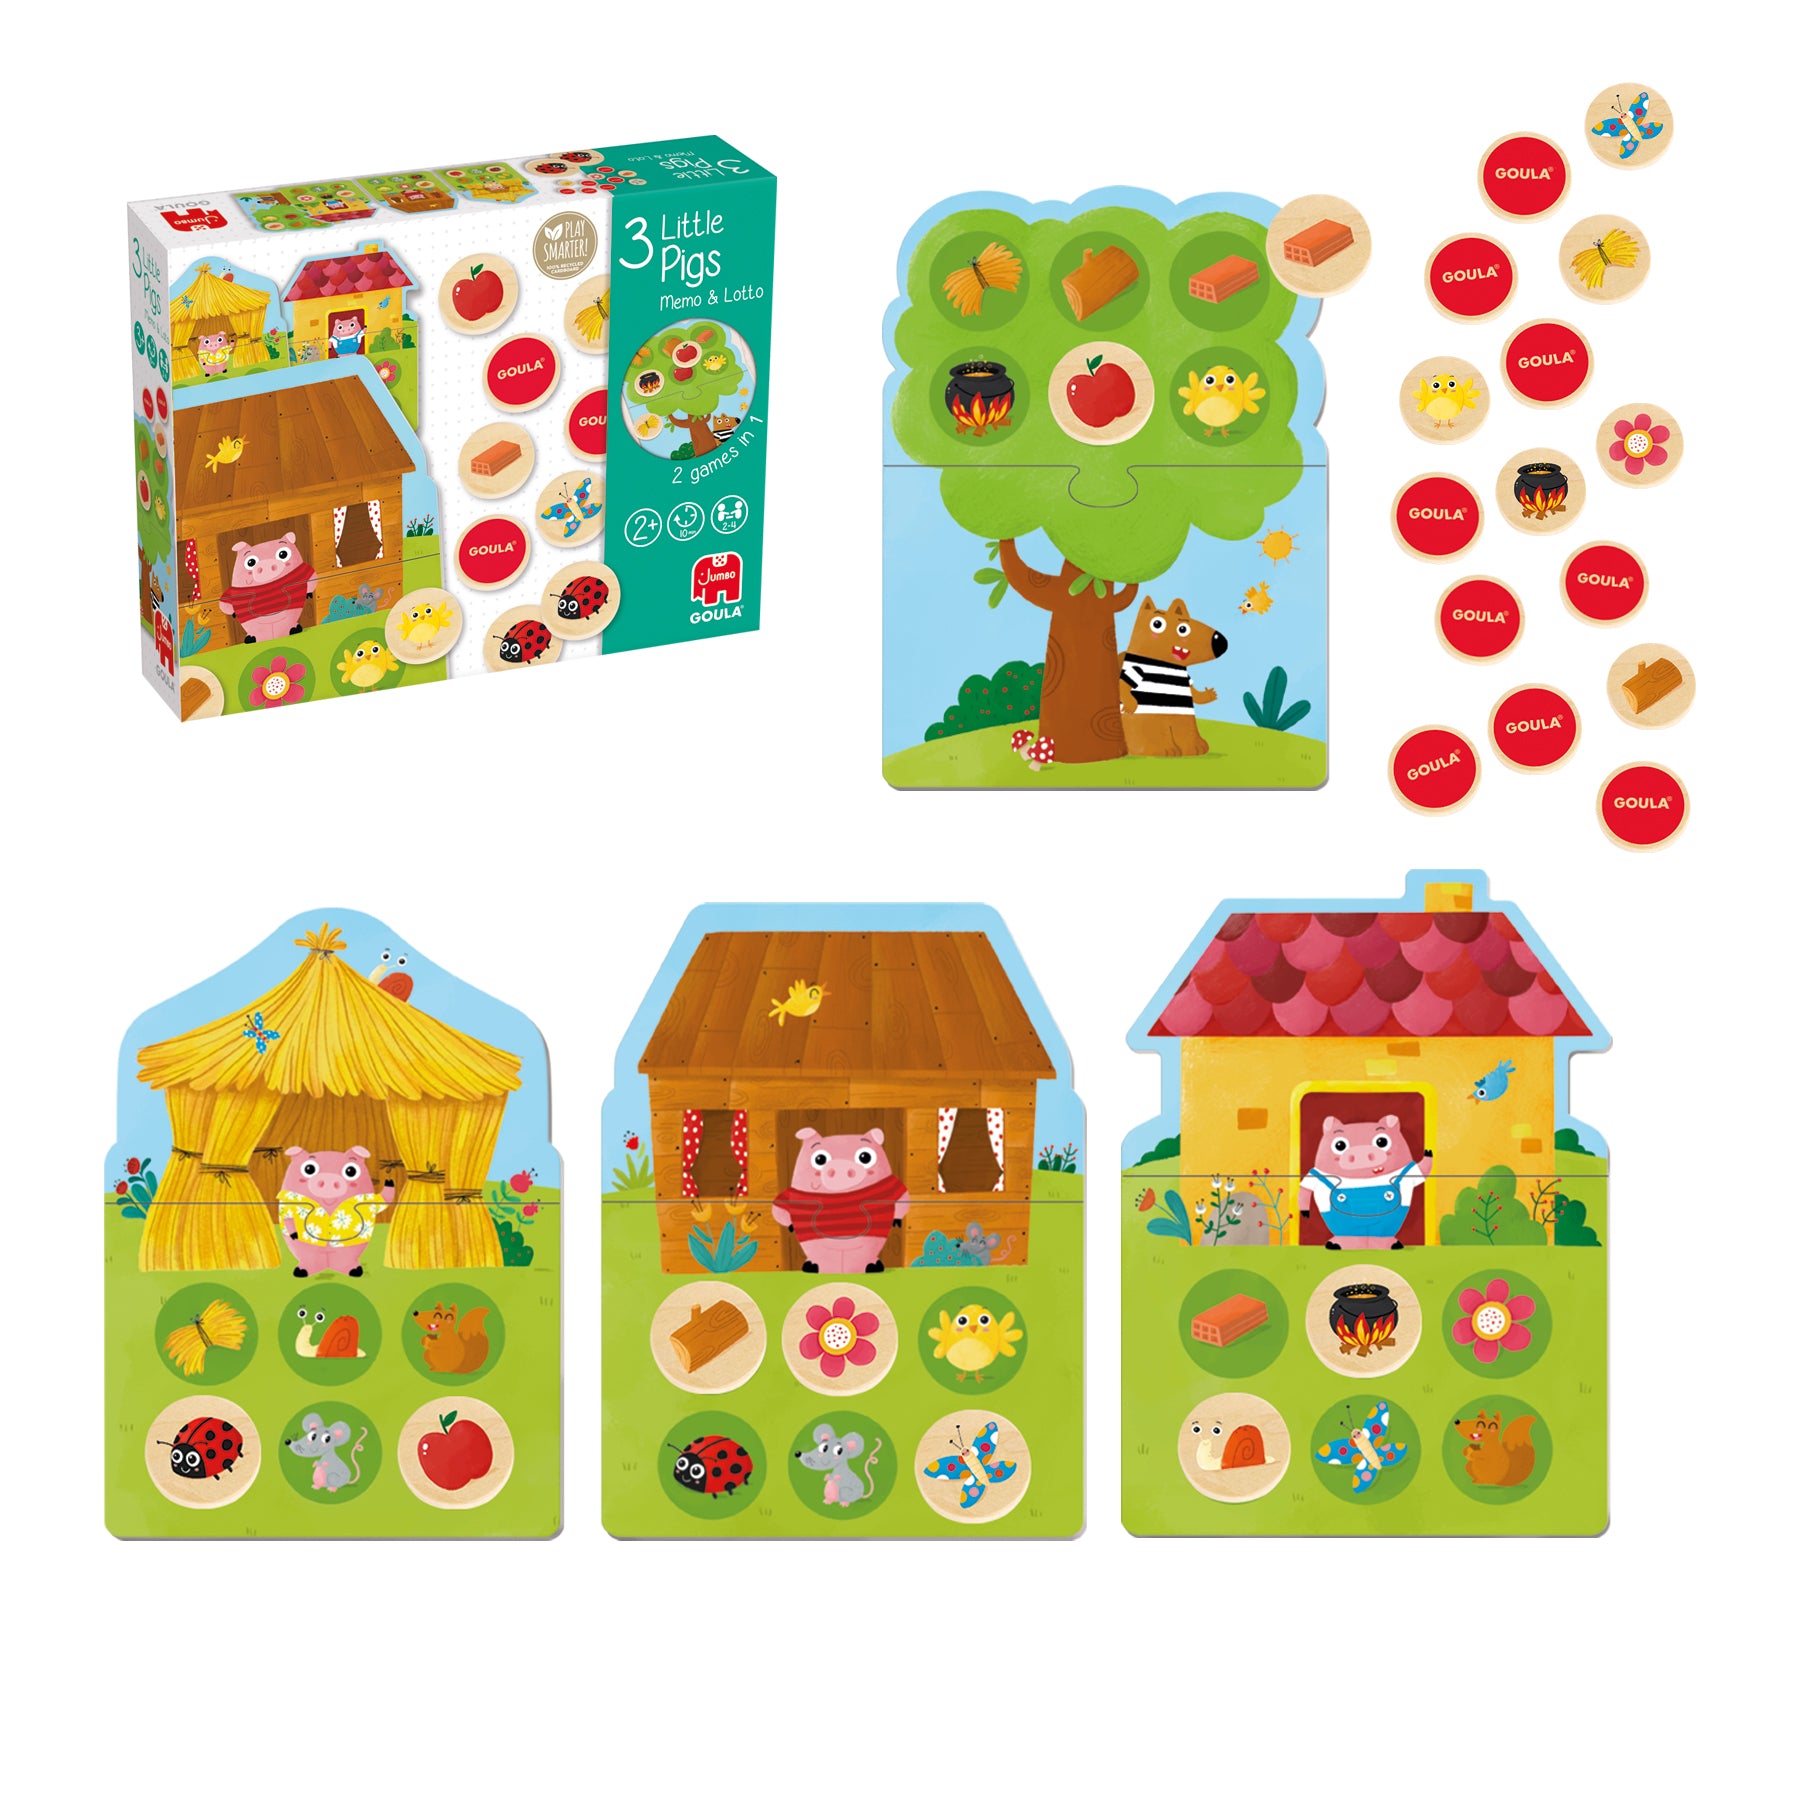 3 Little pigs Memo&Loto - product image - Jumboplay.com